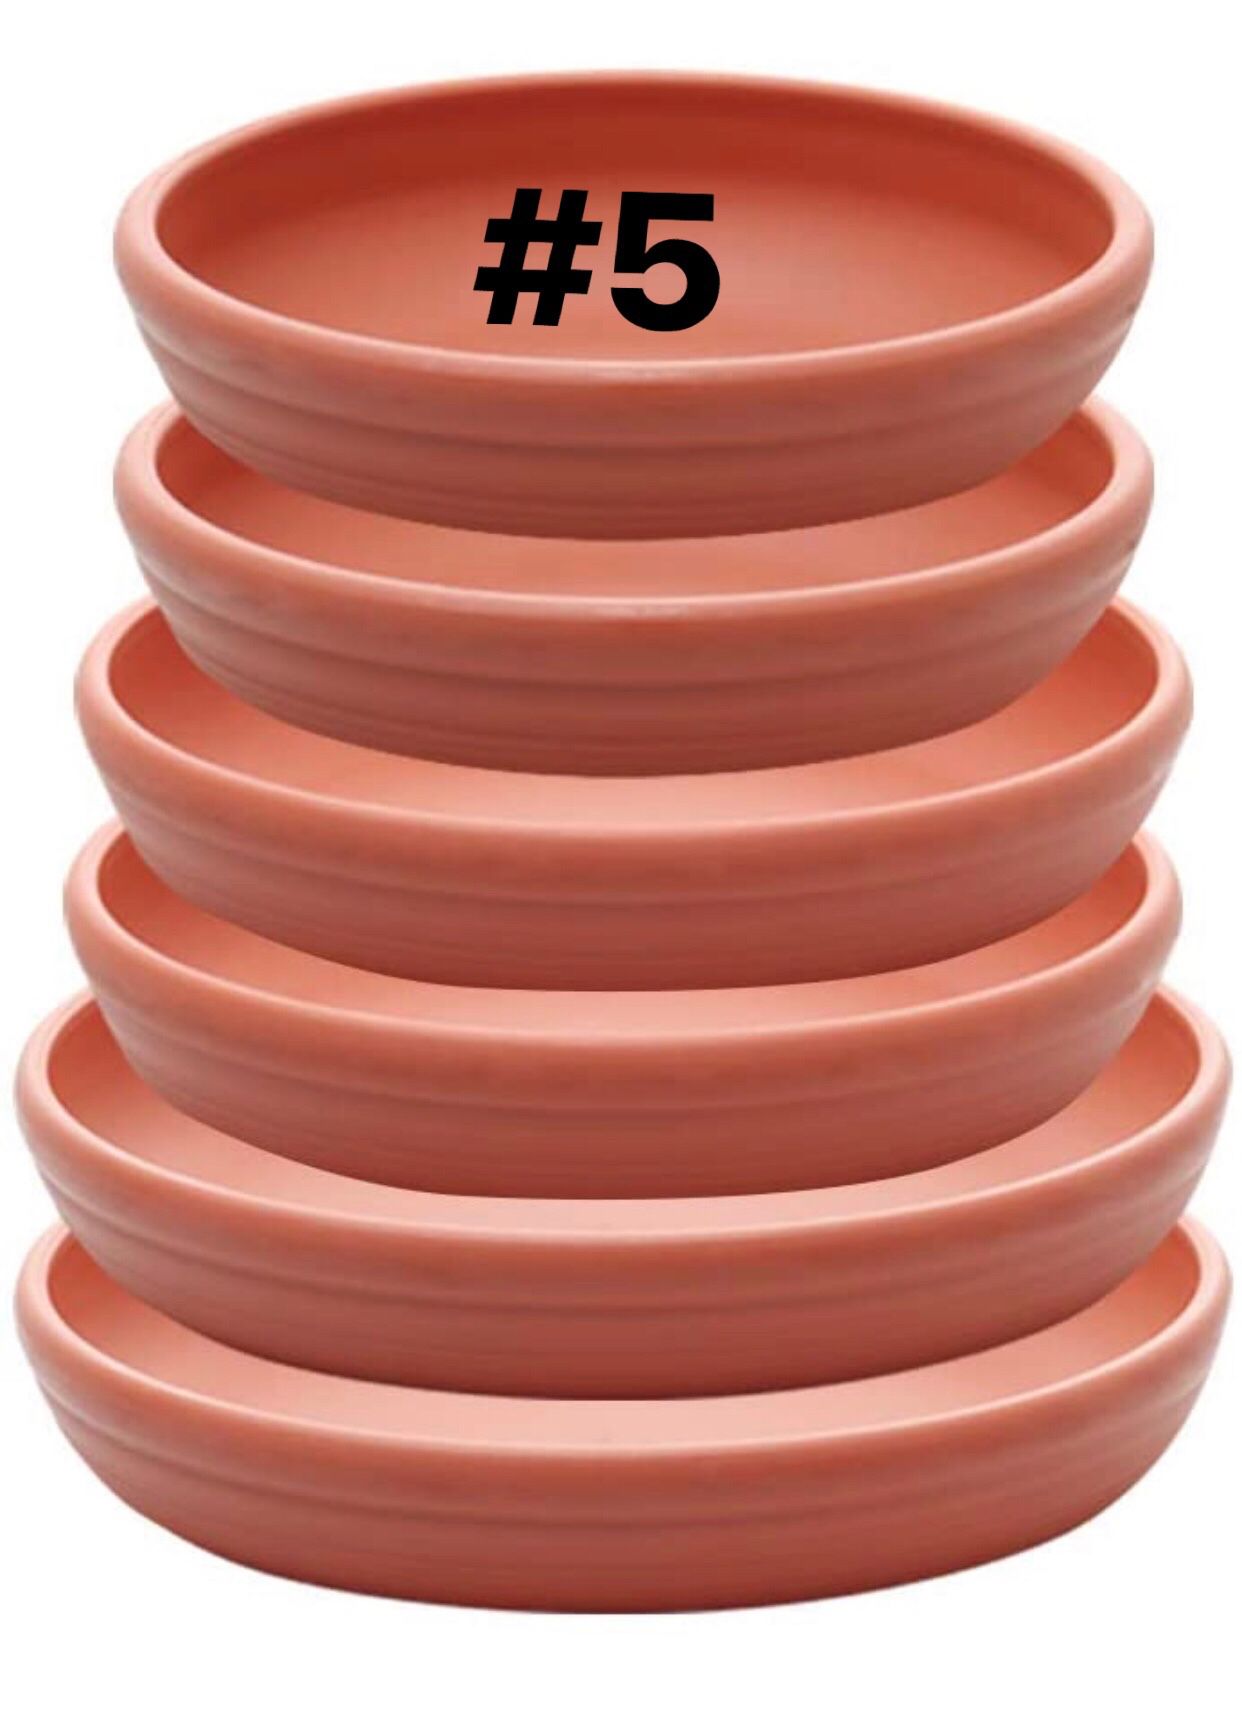 #5）Round Plastic Plant Saucer Drip Tray Set 6